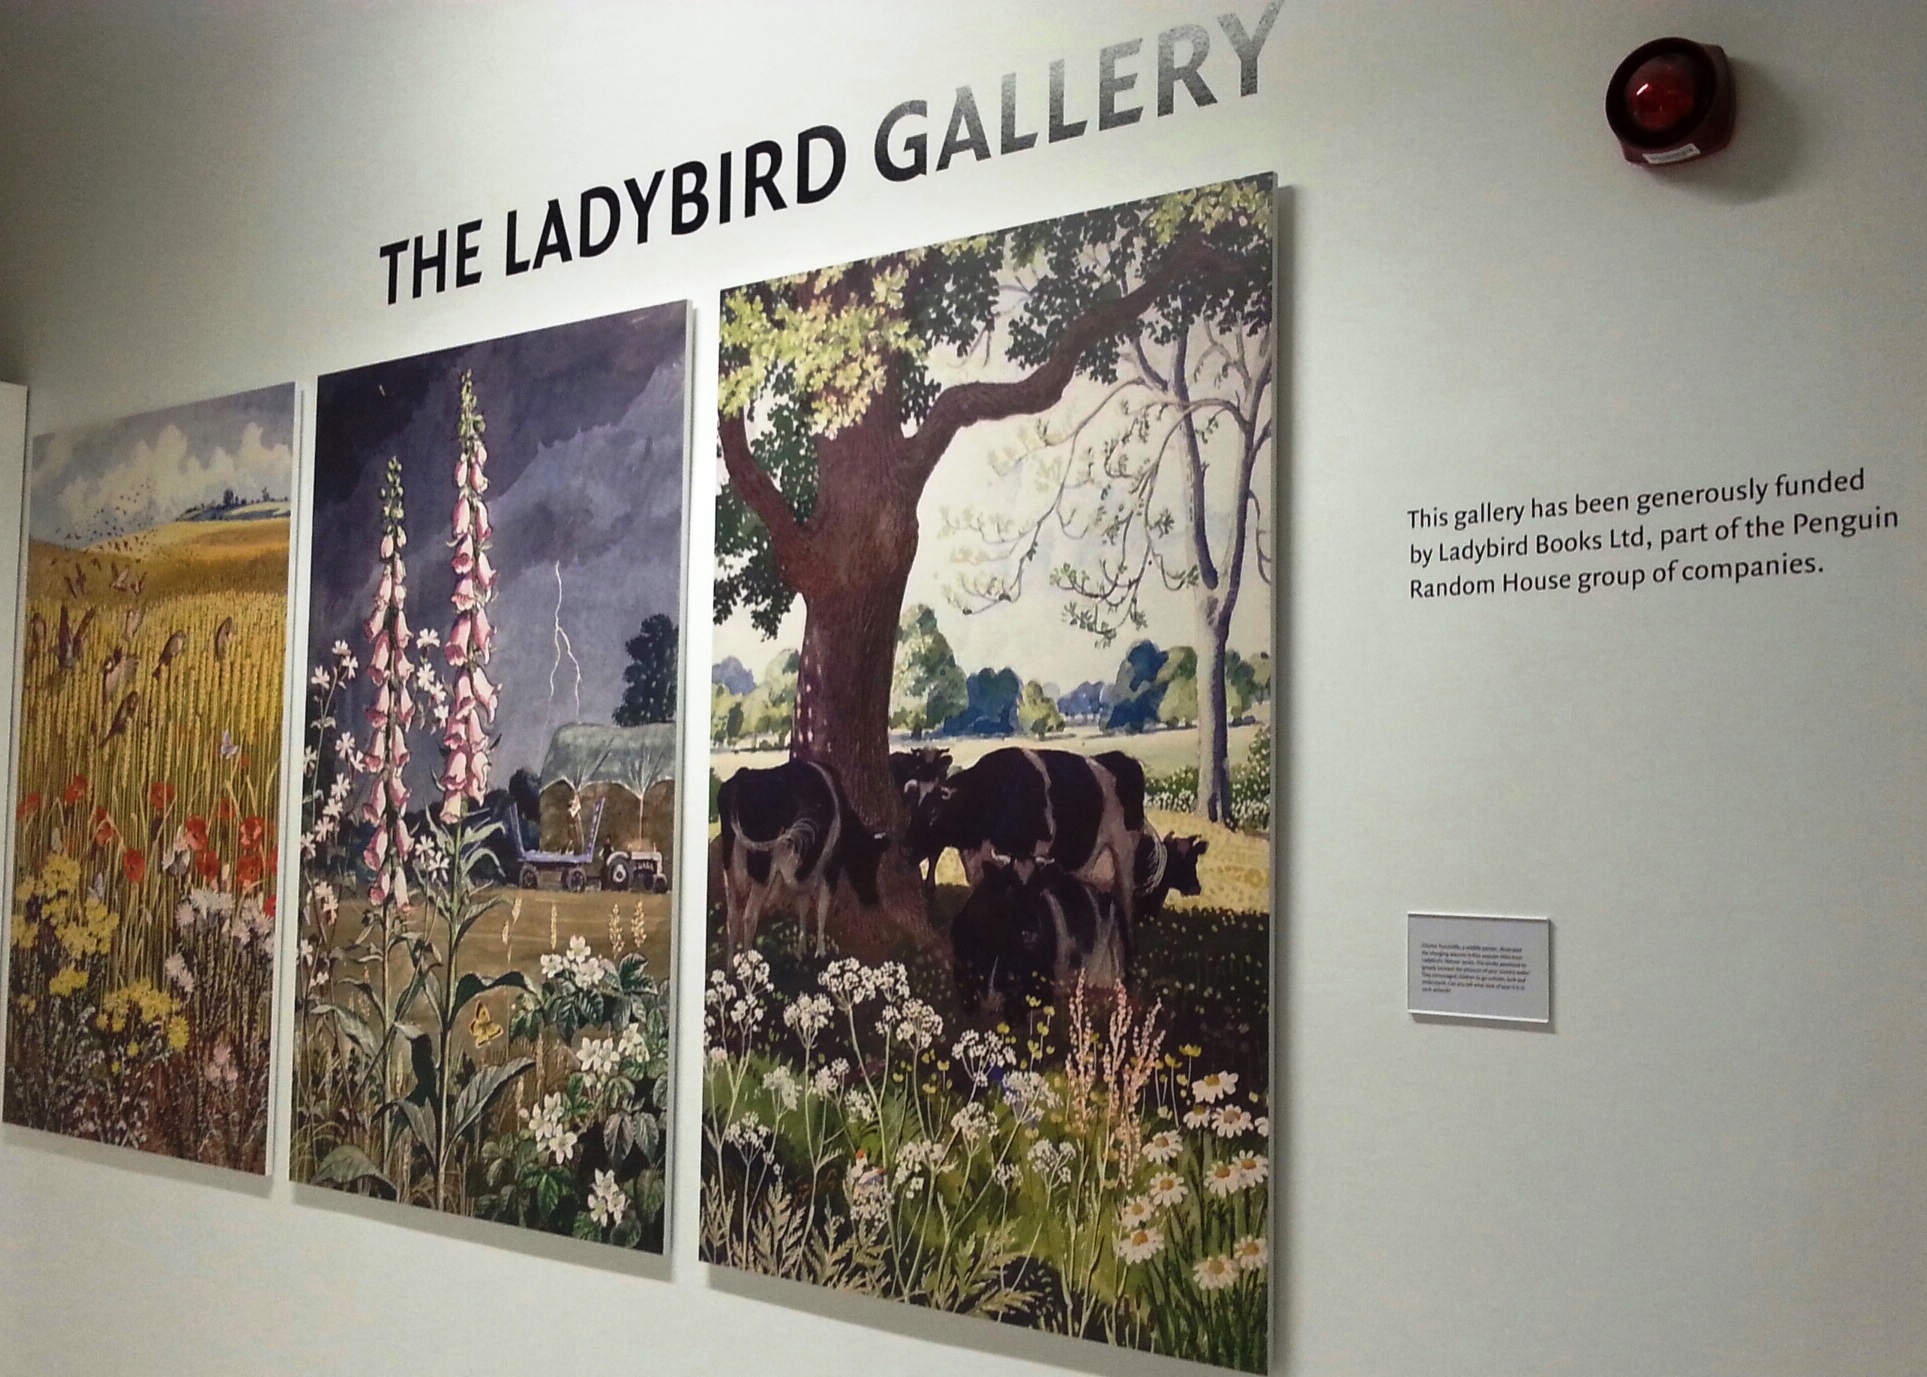 The Ladybird Gallery